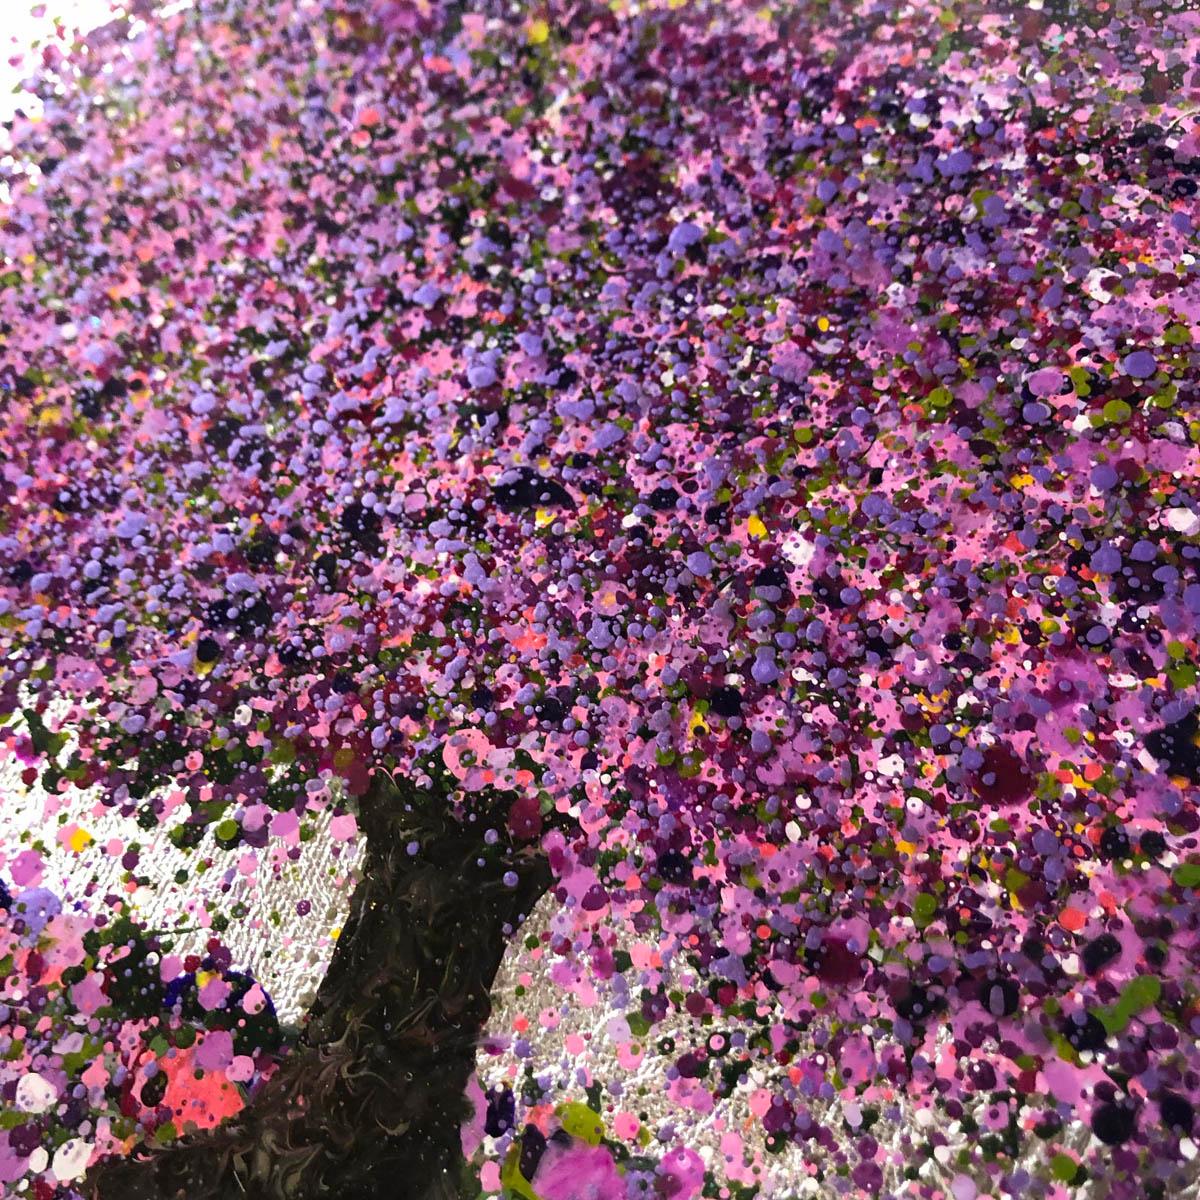 lilac tree painting